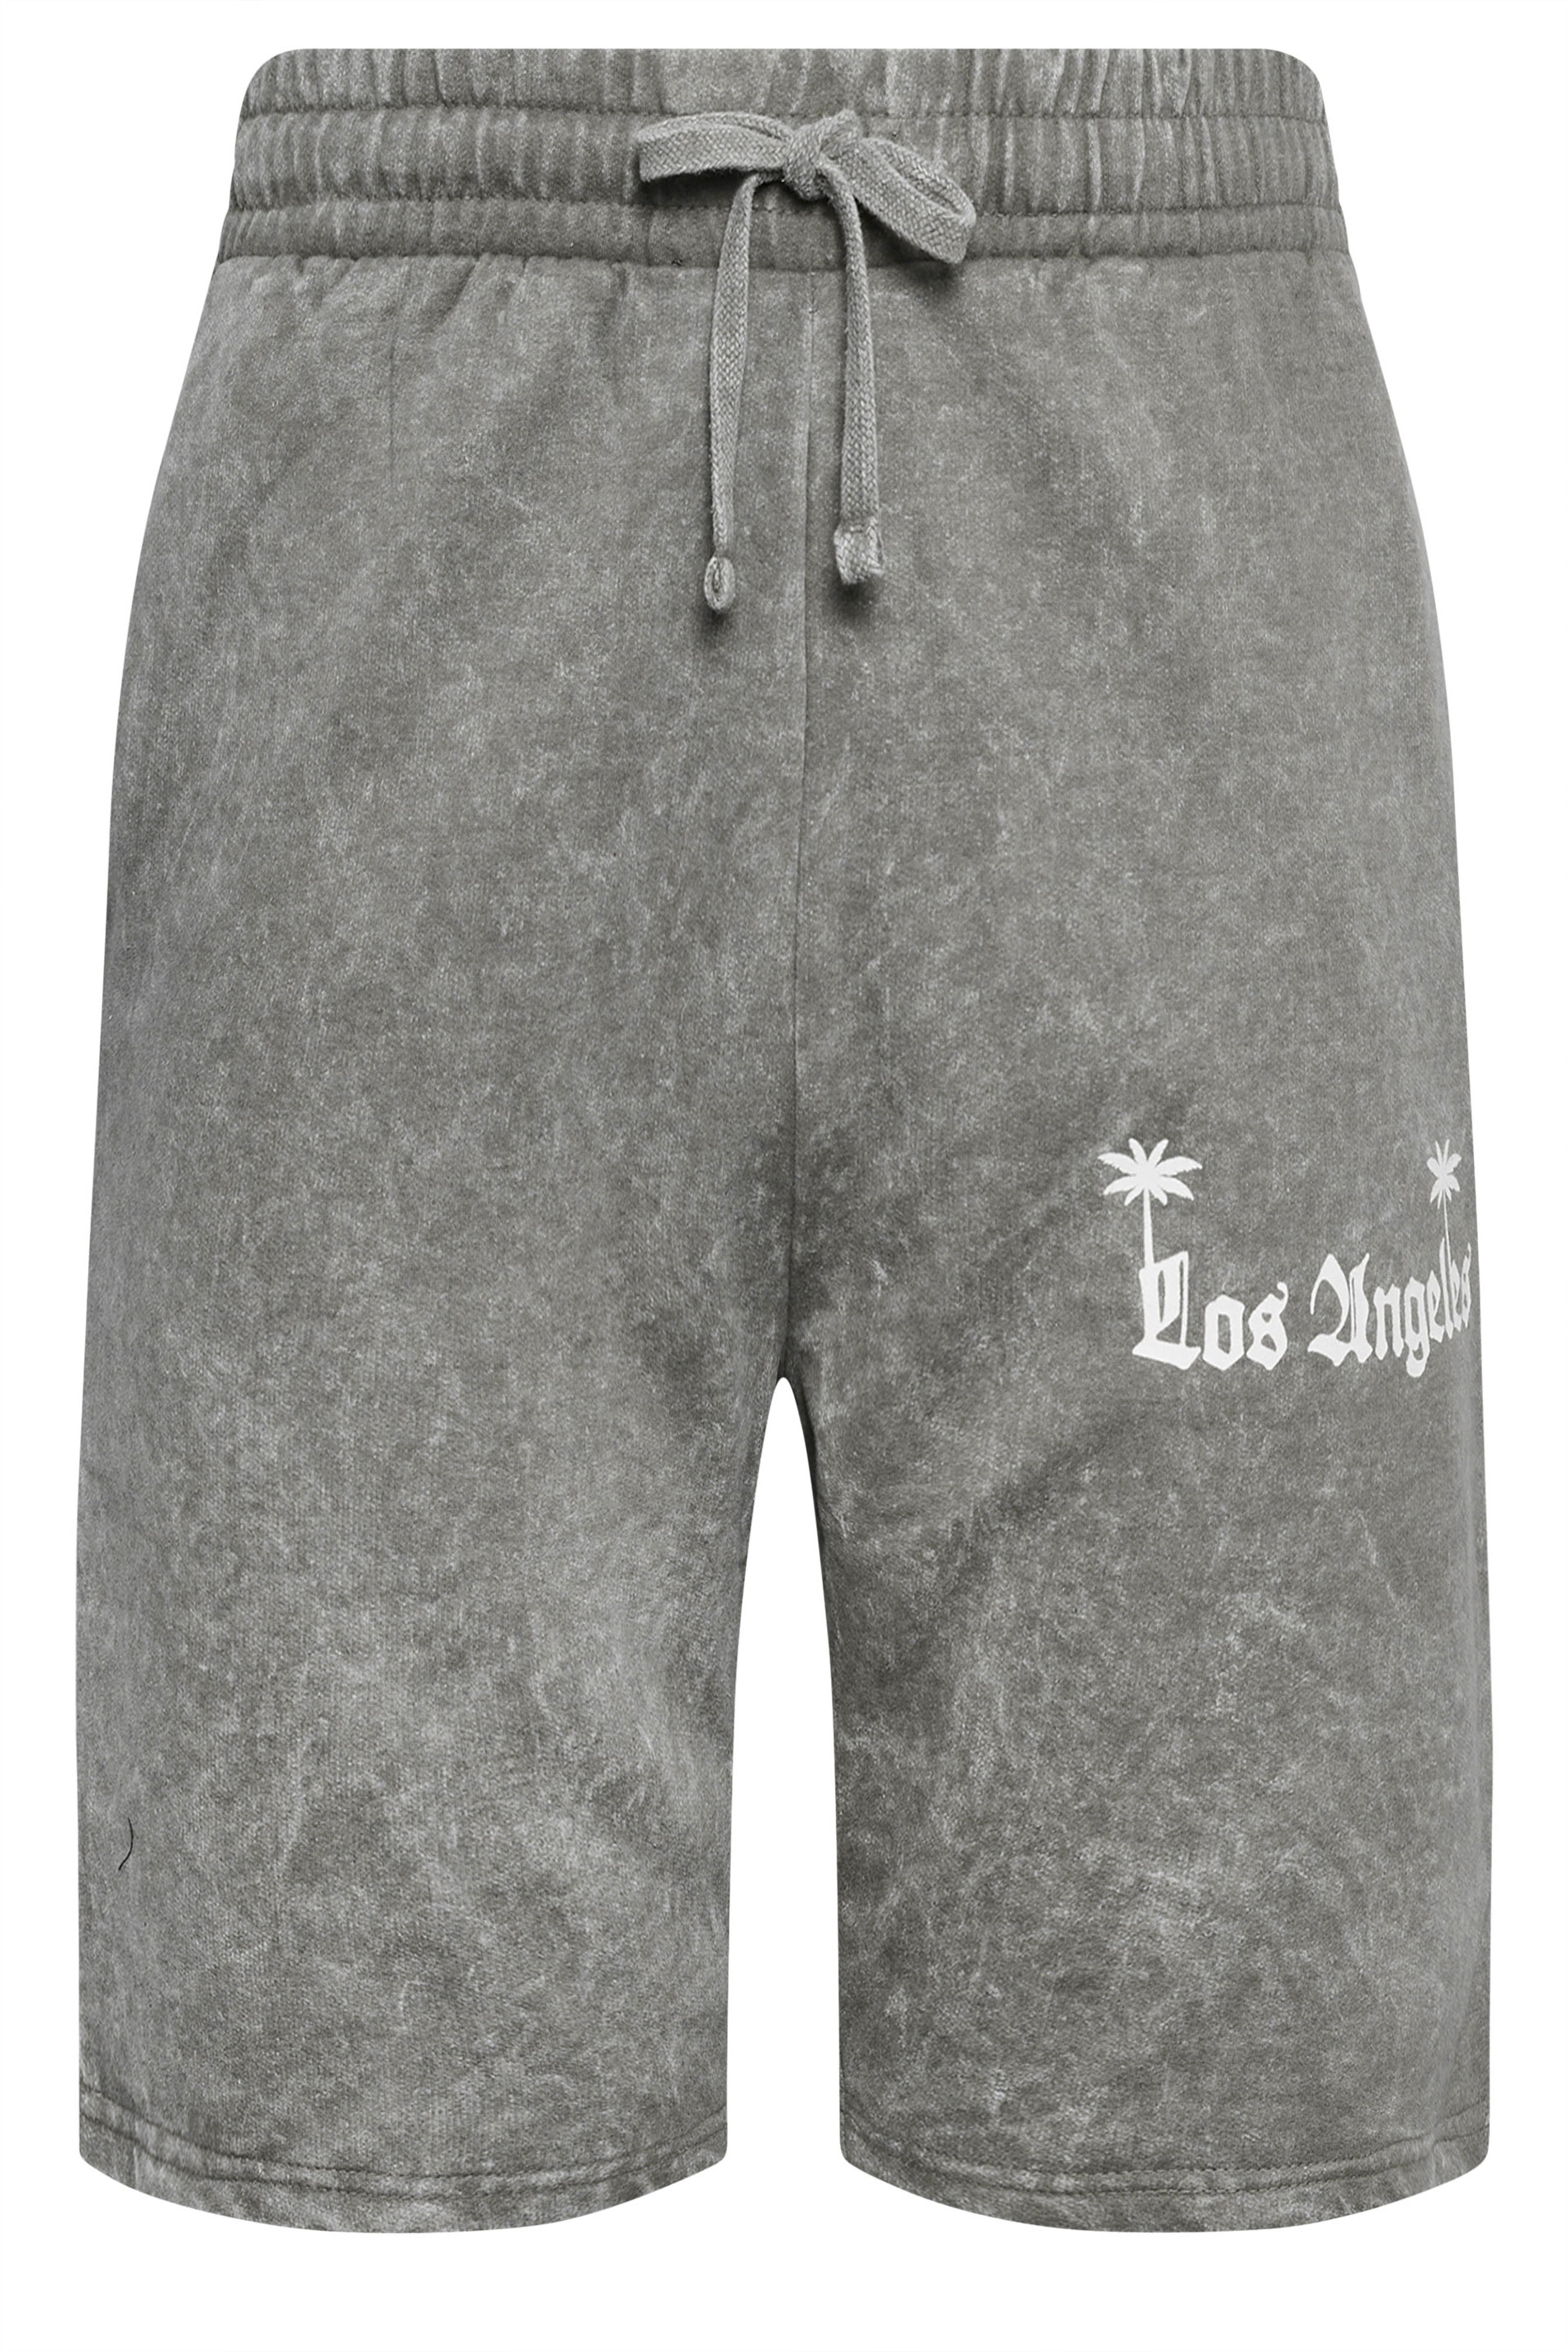 BadRhino Big & Tall Grey Acid Wash 'Los Angeles' Cargo Shorts | BadRhino  3